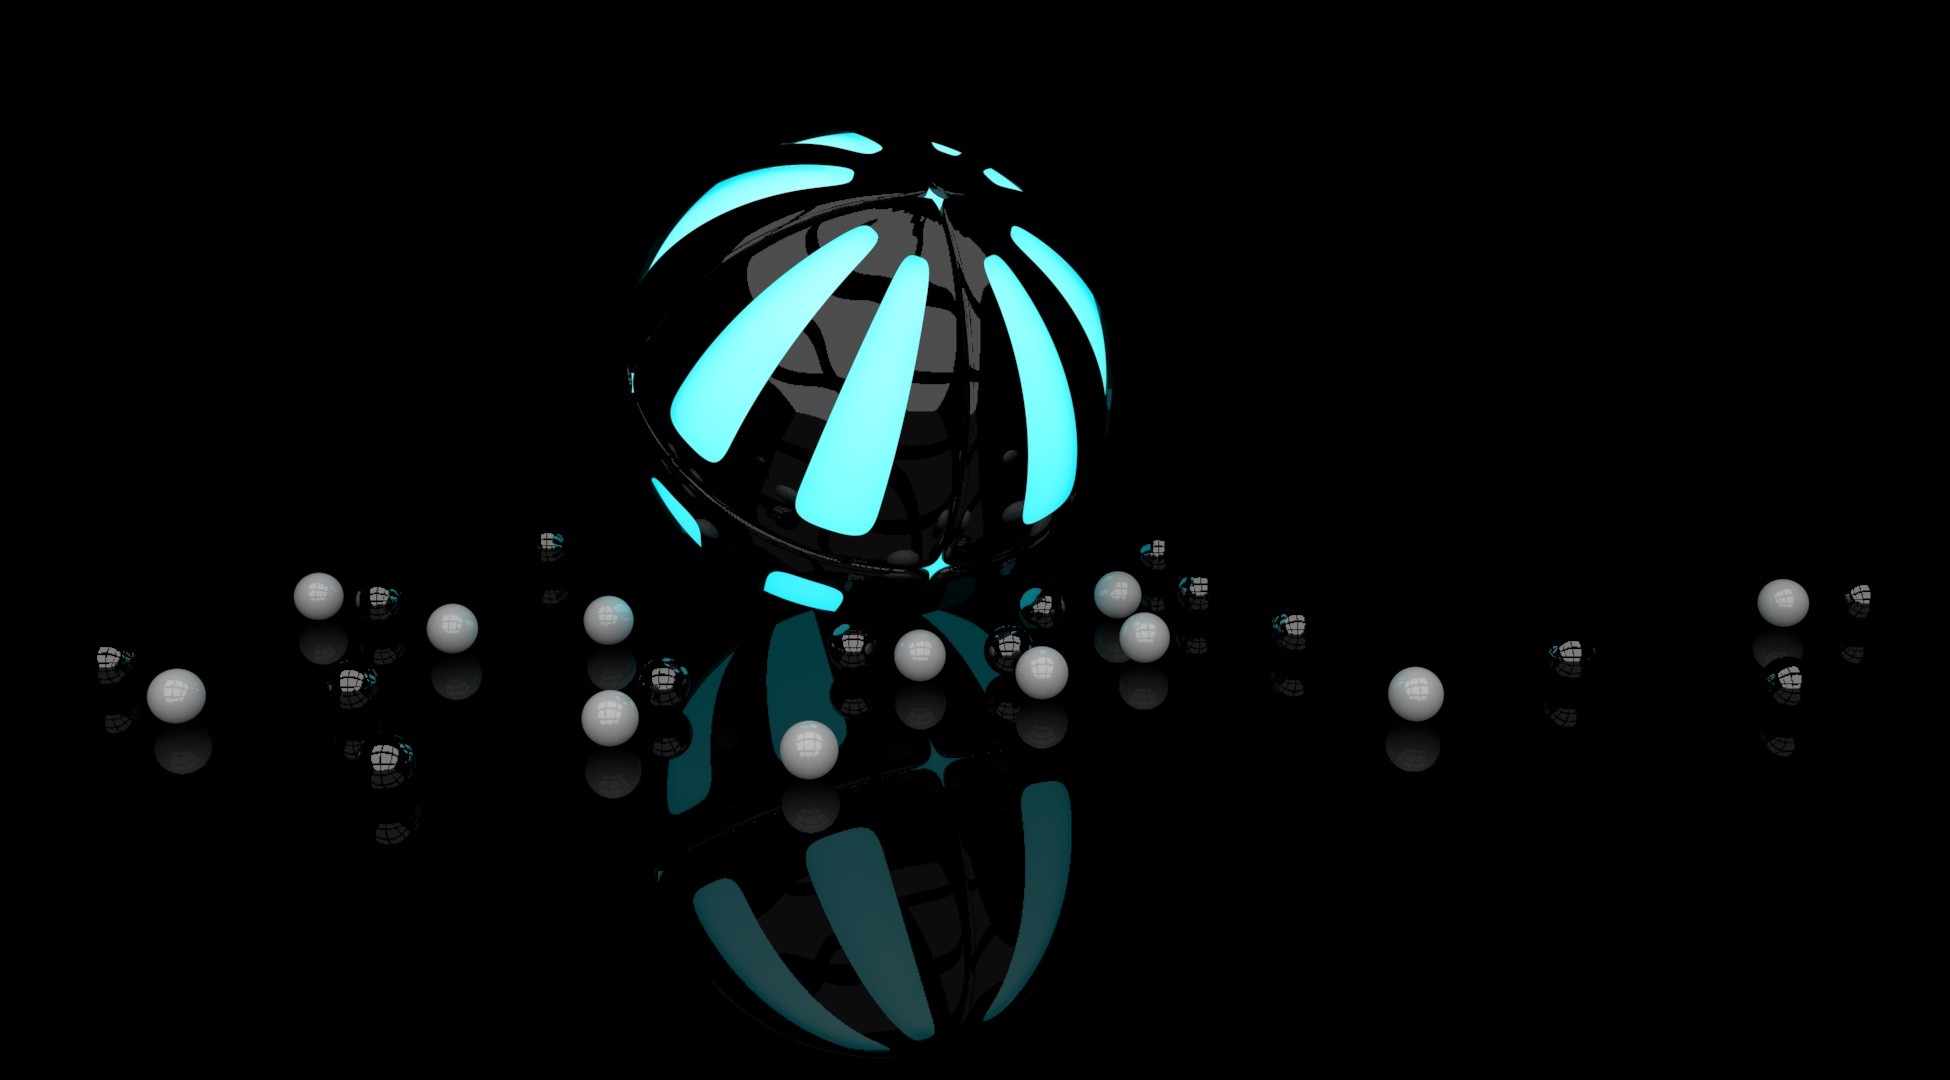 General 1950x1080 ball reflection cyan sphere dark digital art CGI black background simple background